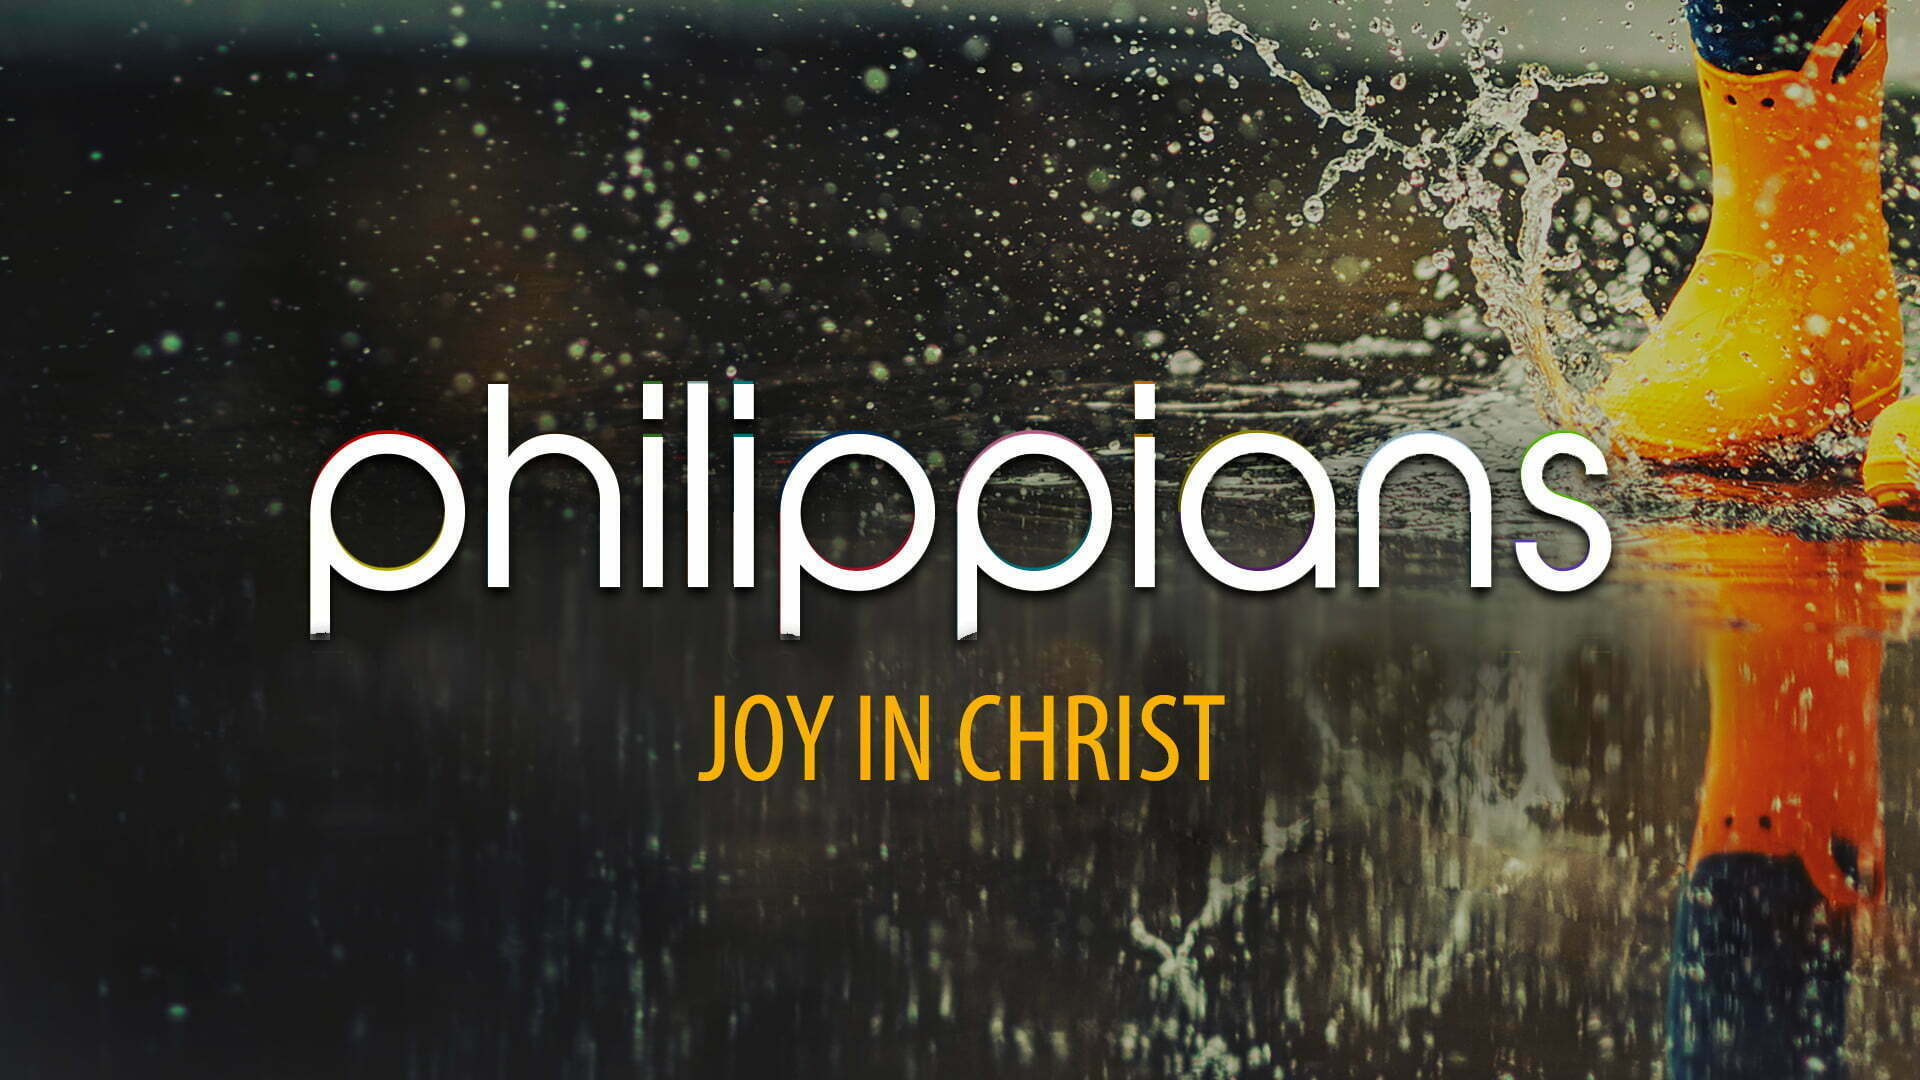 Joy in Christ